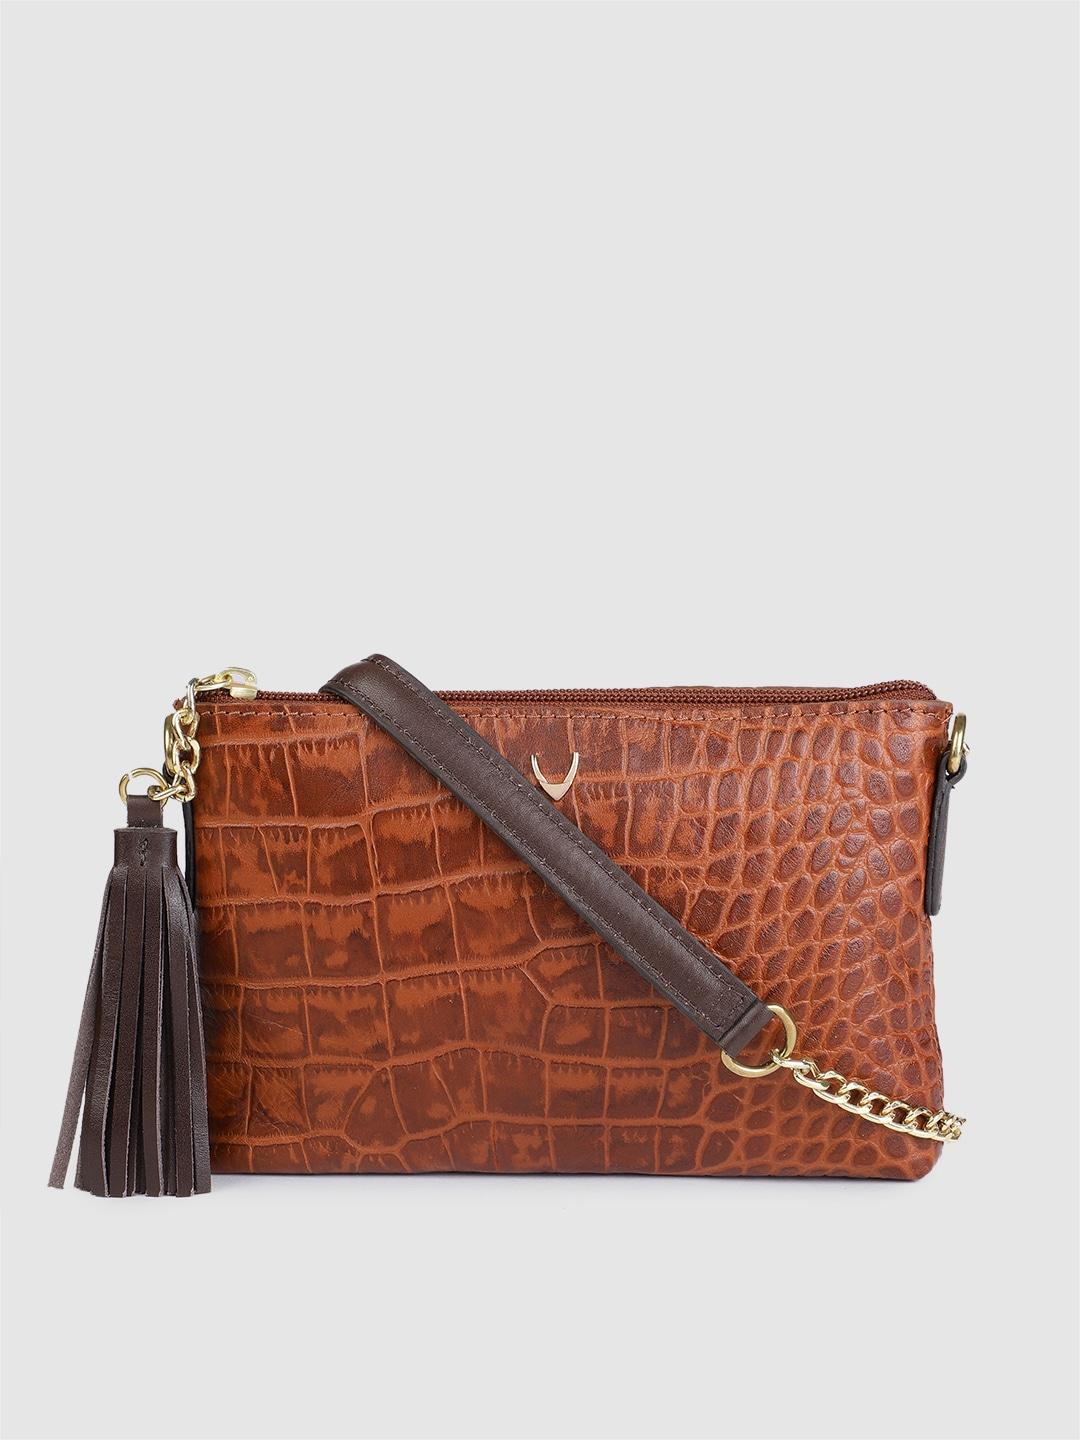 hidesign-tan-brown-croc-textured-leather-sling-bag